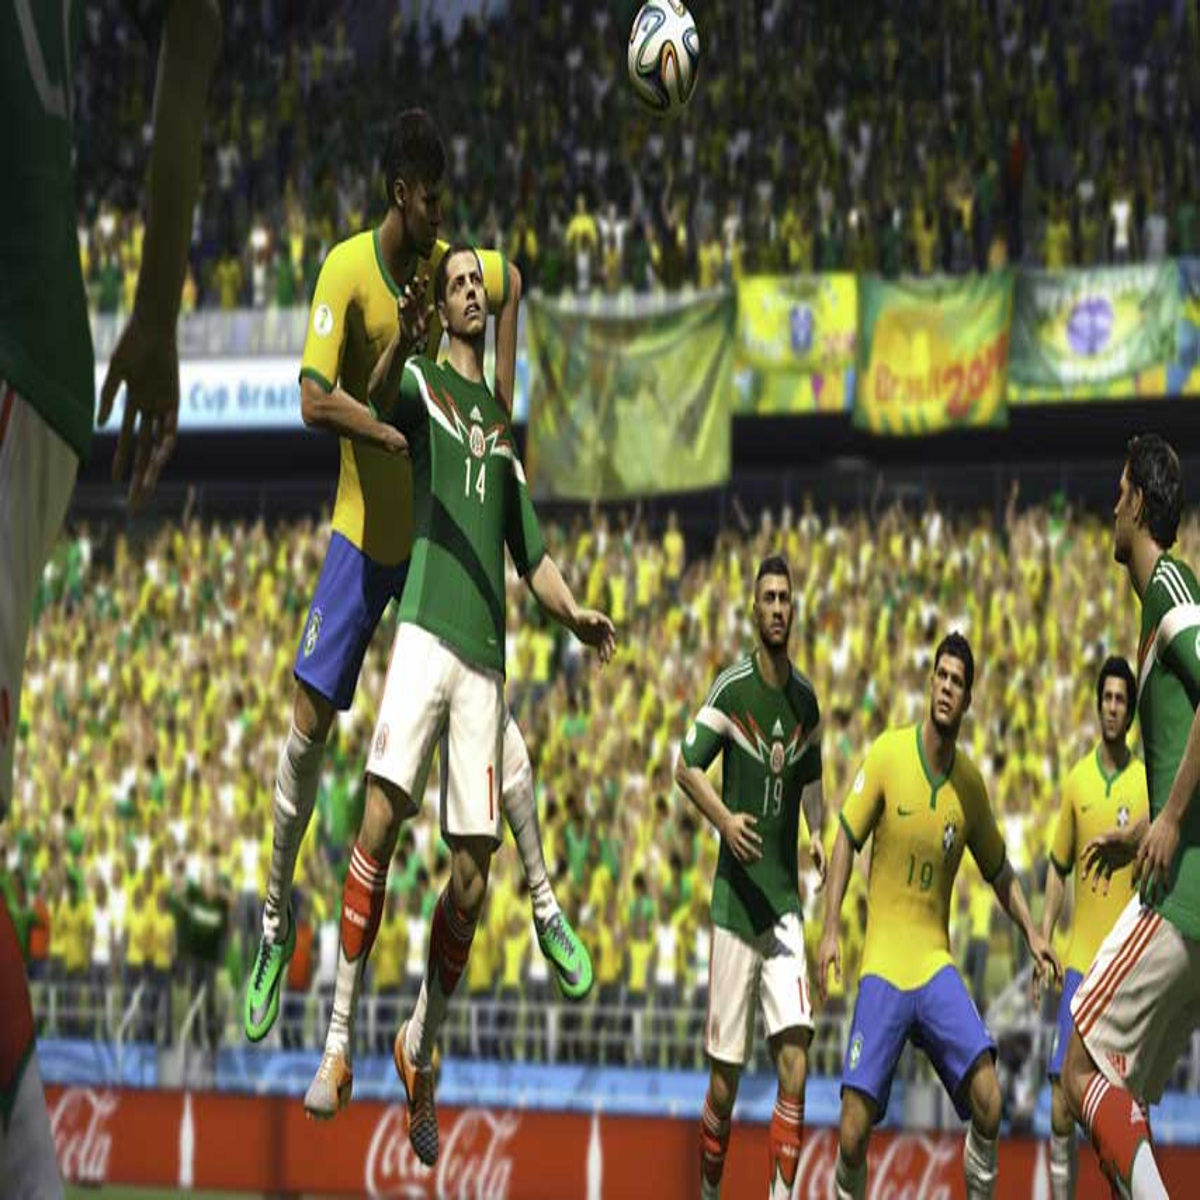 FIFA 15 doesn't have Brazilian domestic teams